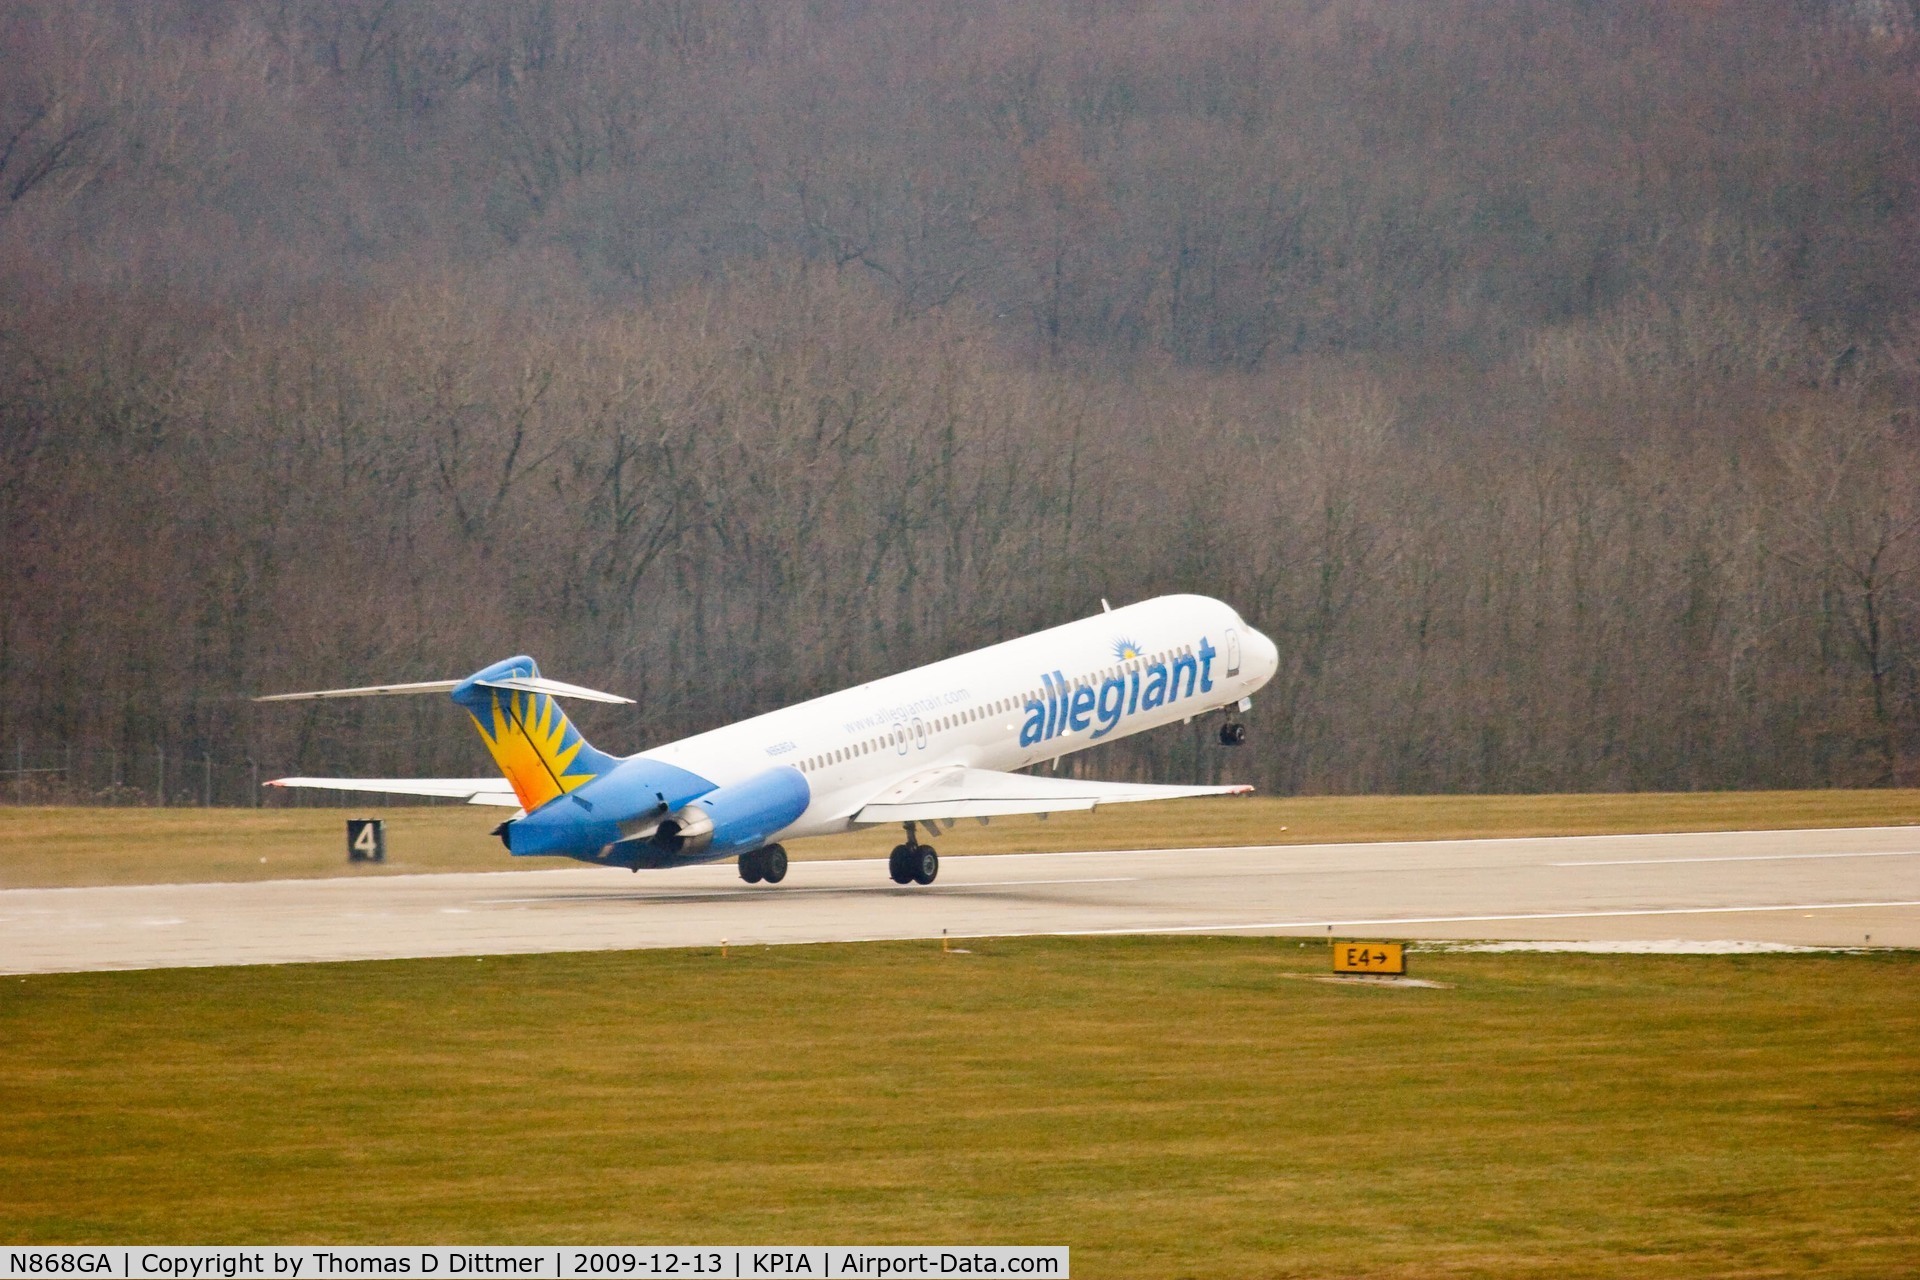 N868GA, 1987 McDonnell Douglas MD-83 (DC-9-83) C/N 49554, Allegiant Airways (N868GA) leaves the ground enroute to destination